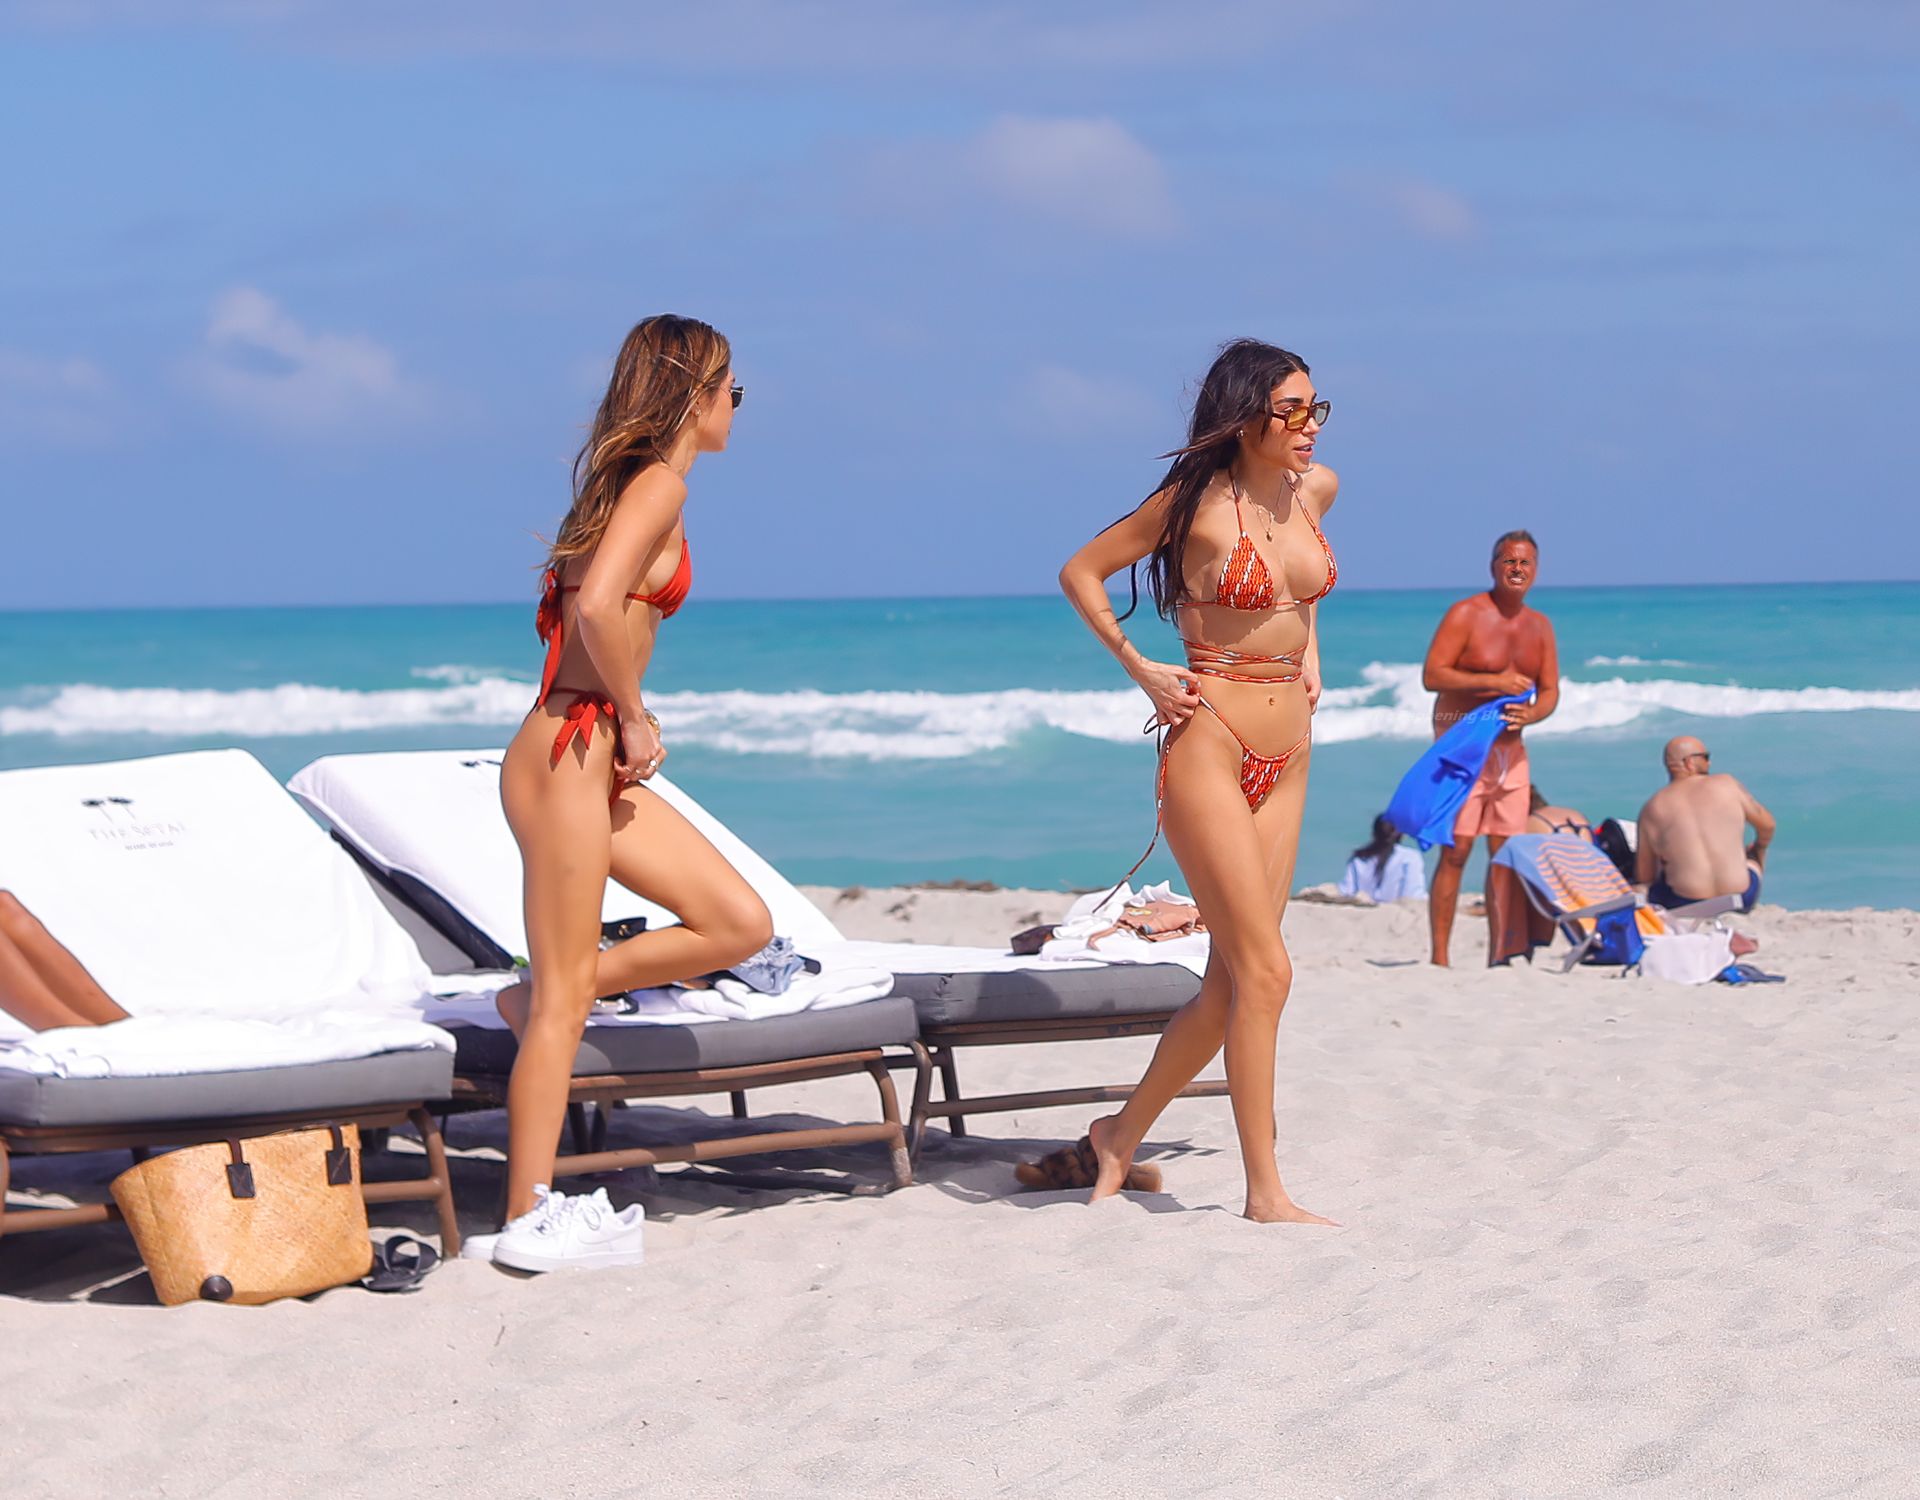 Chantel Jeffries Turns Heads of Beachgoers on the Beach in Miami (83 Photos)